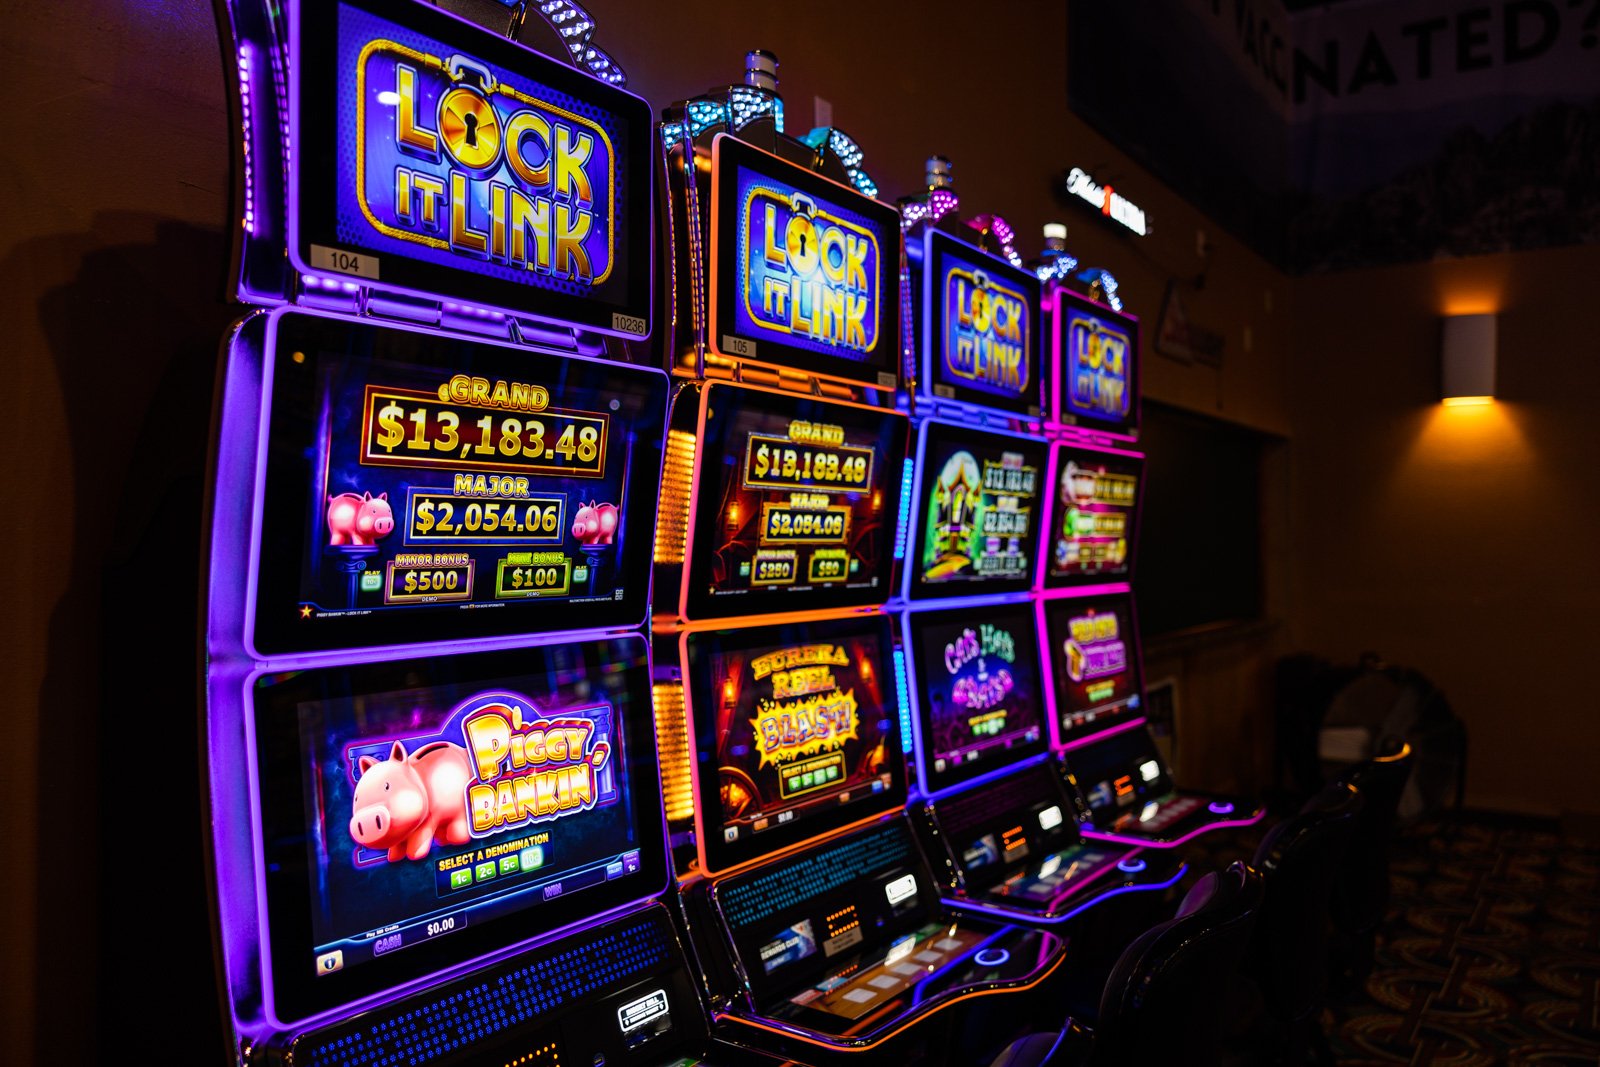 rosebud-casino-gaming-floor-slot-machines-near-valentine-nebraska-13.jpg